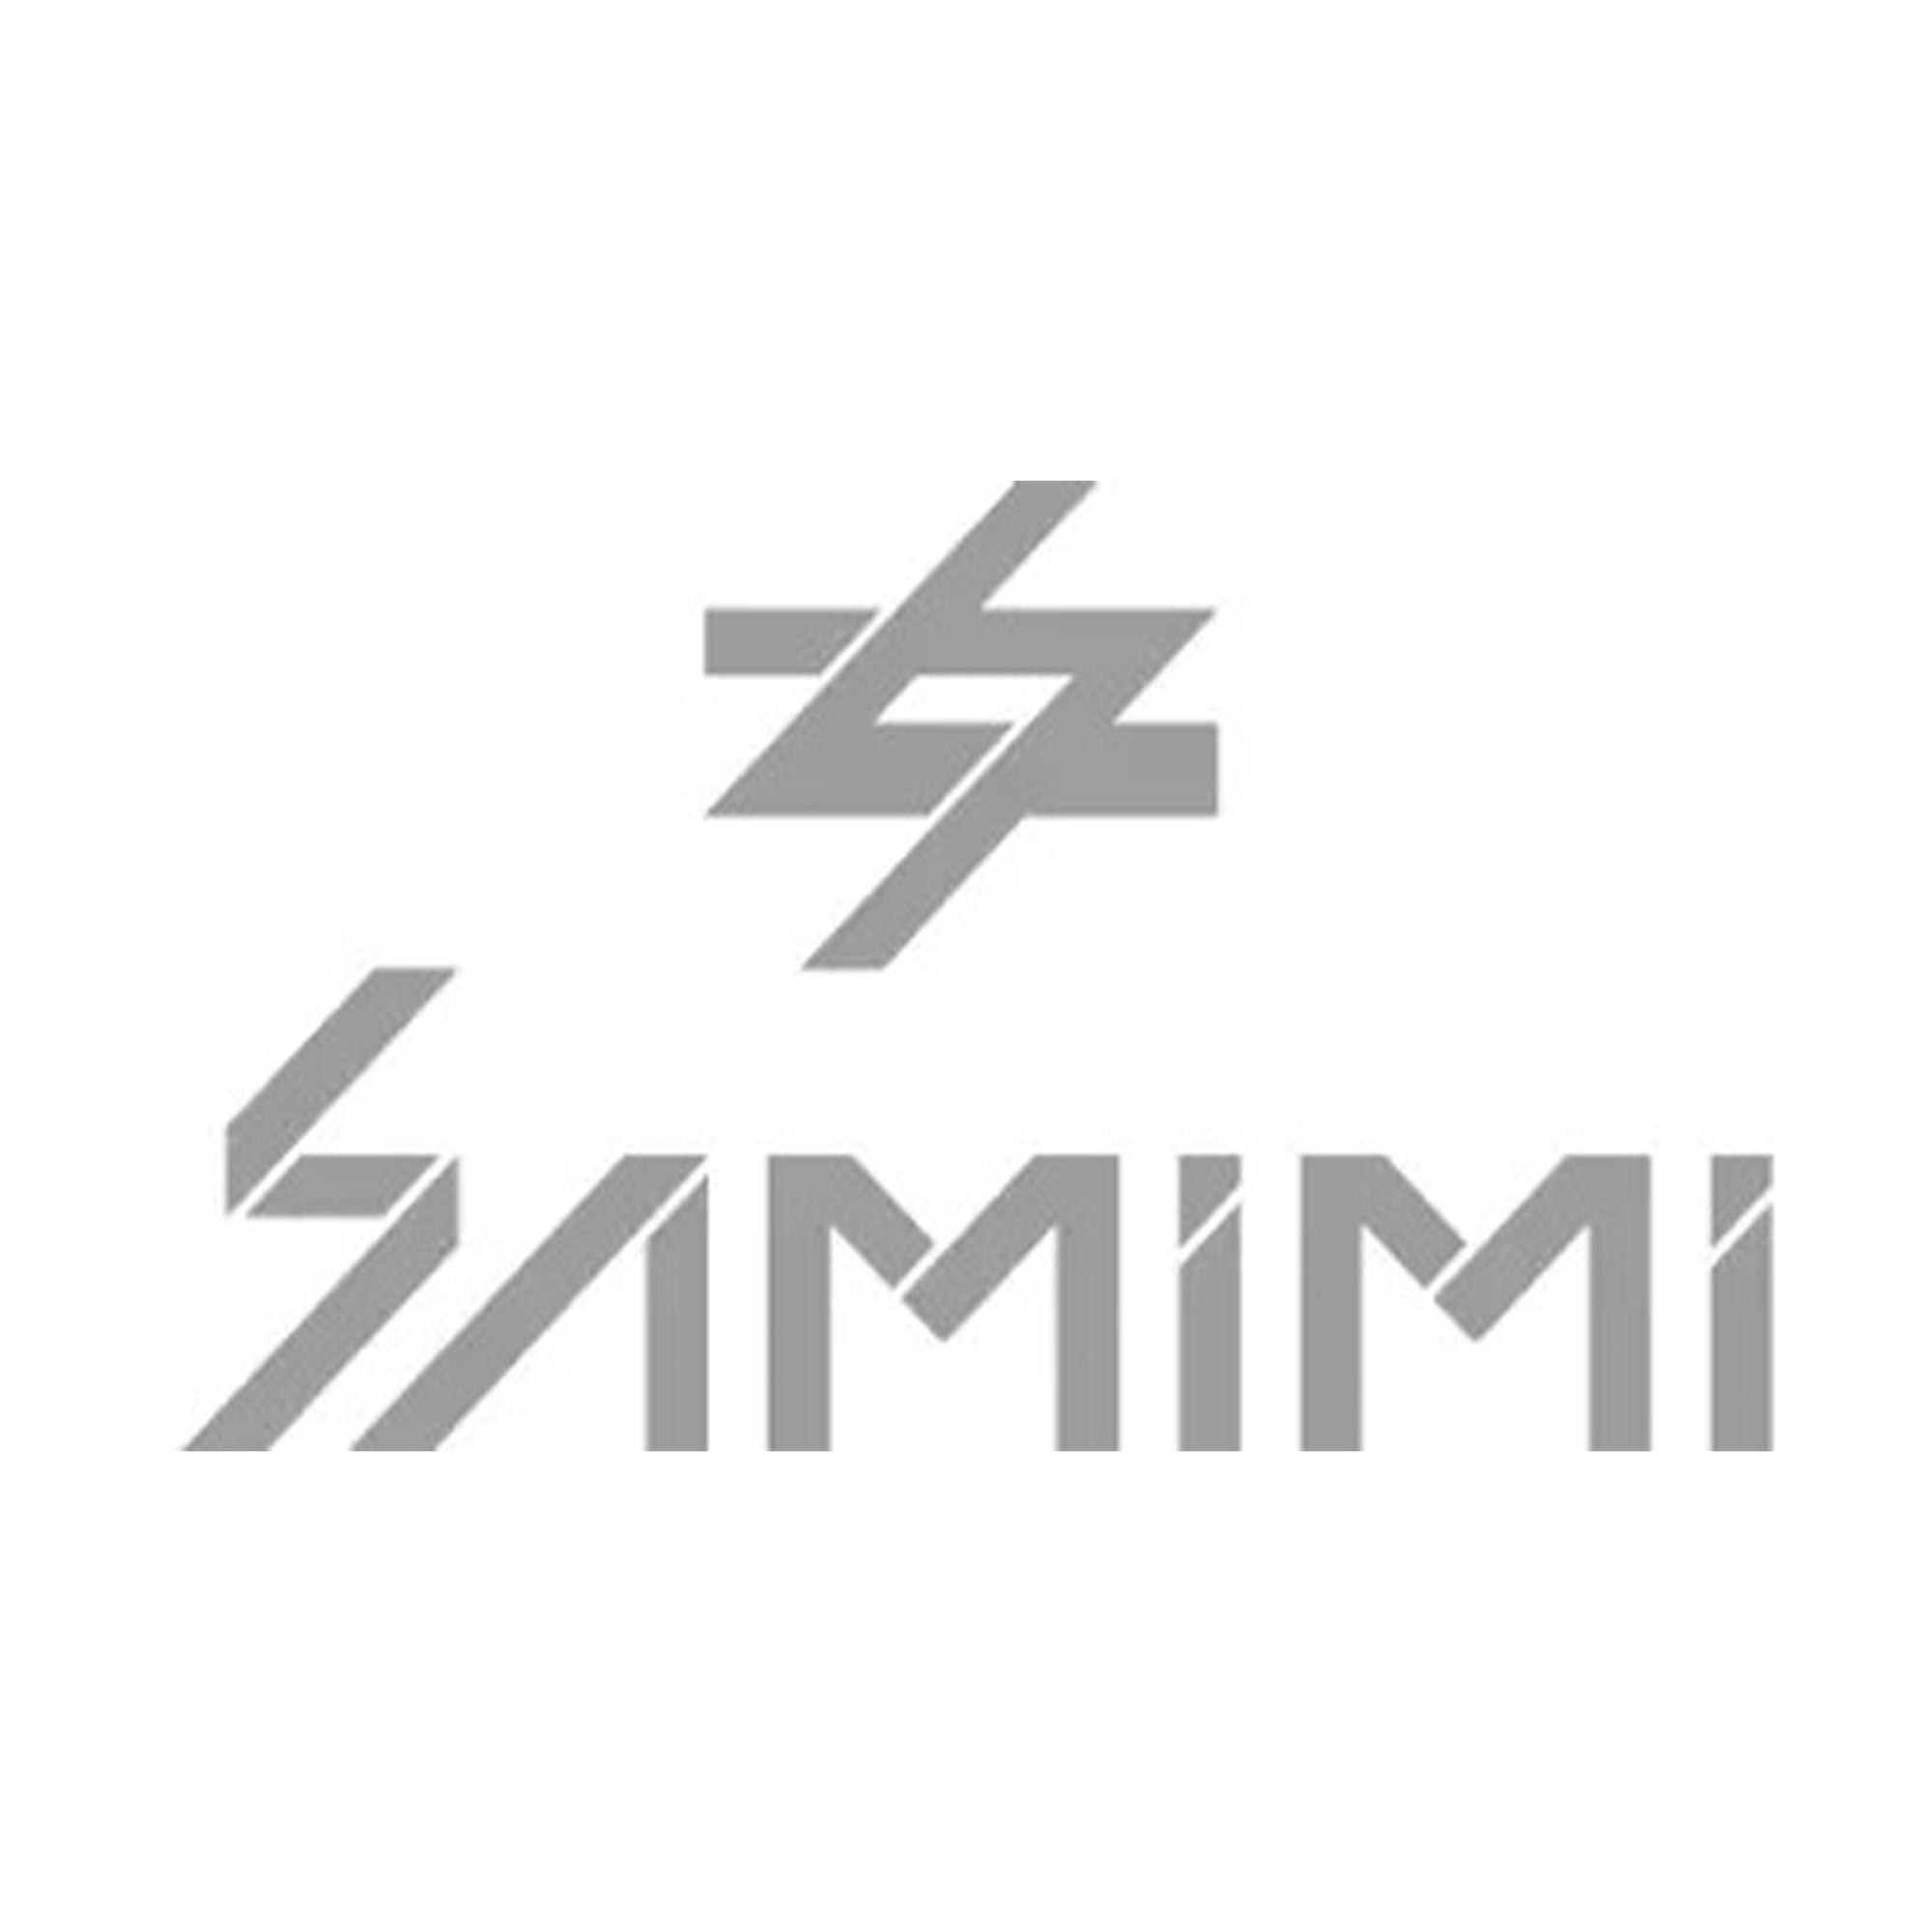 Samimi logo